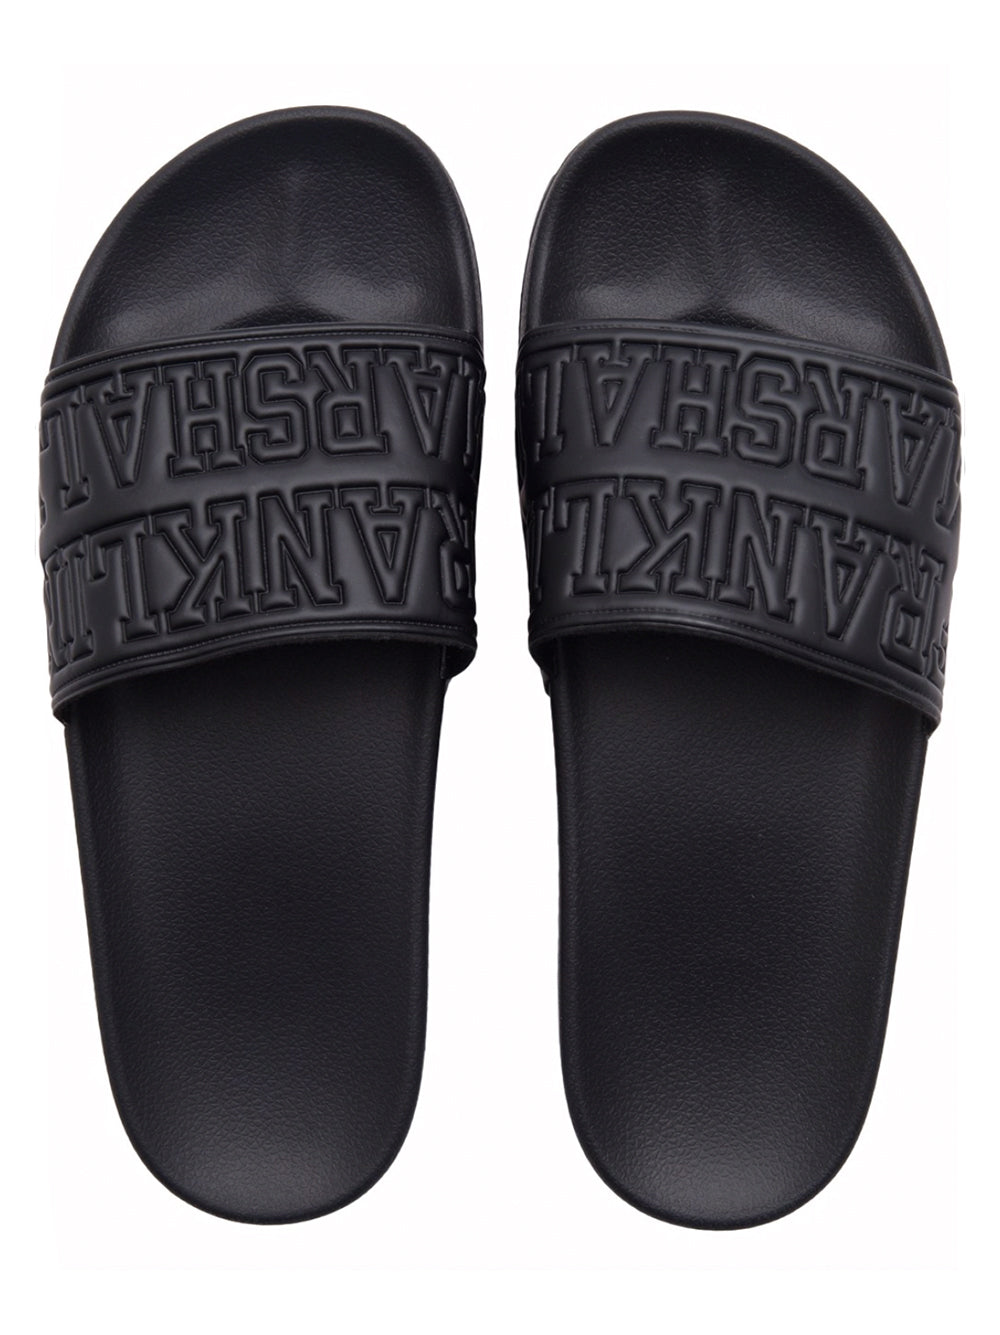 Franklin Marshall Black Sliders | Brandedwear.co.uk – Branded Wear